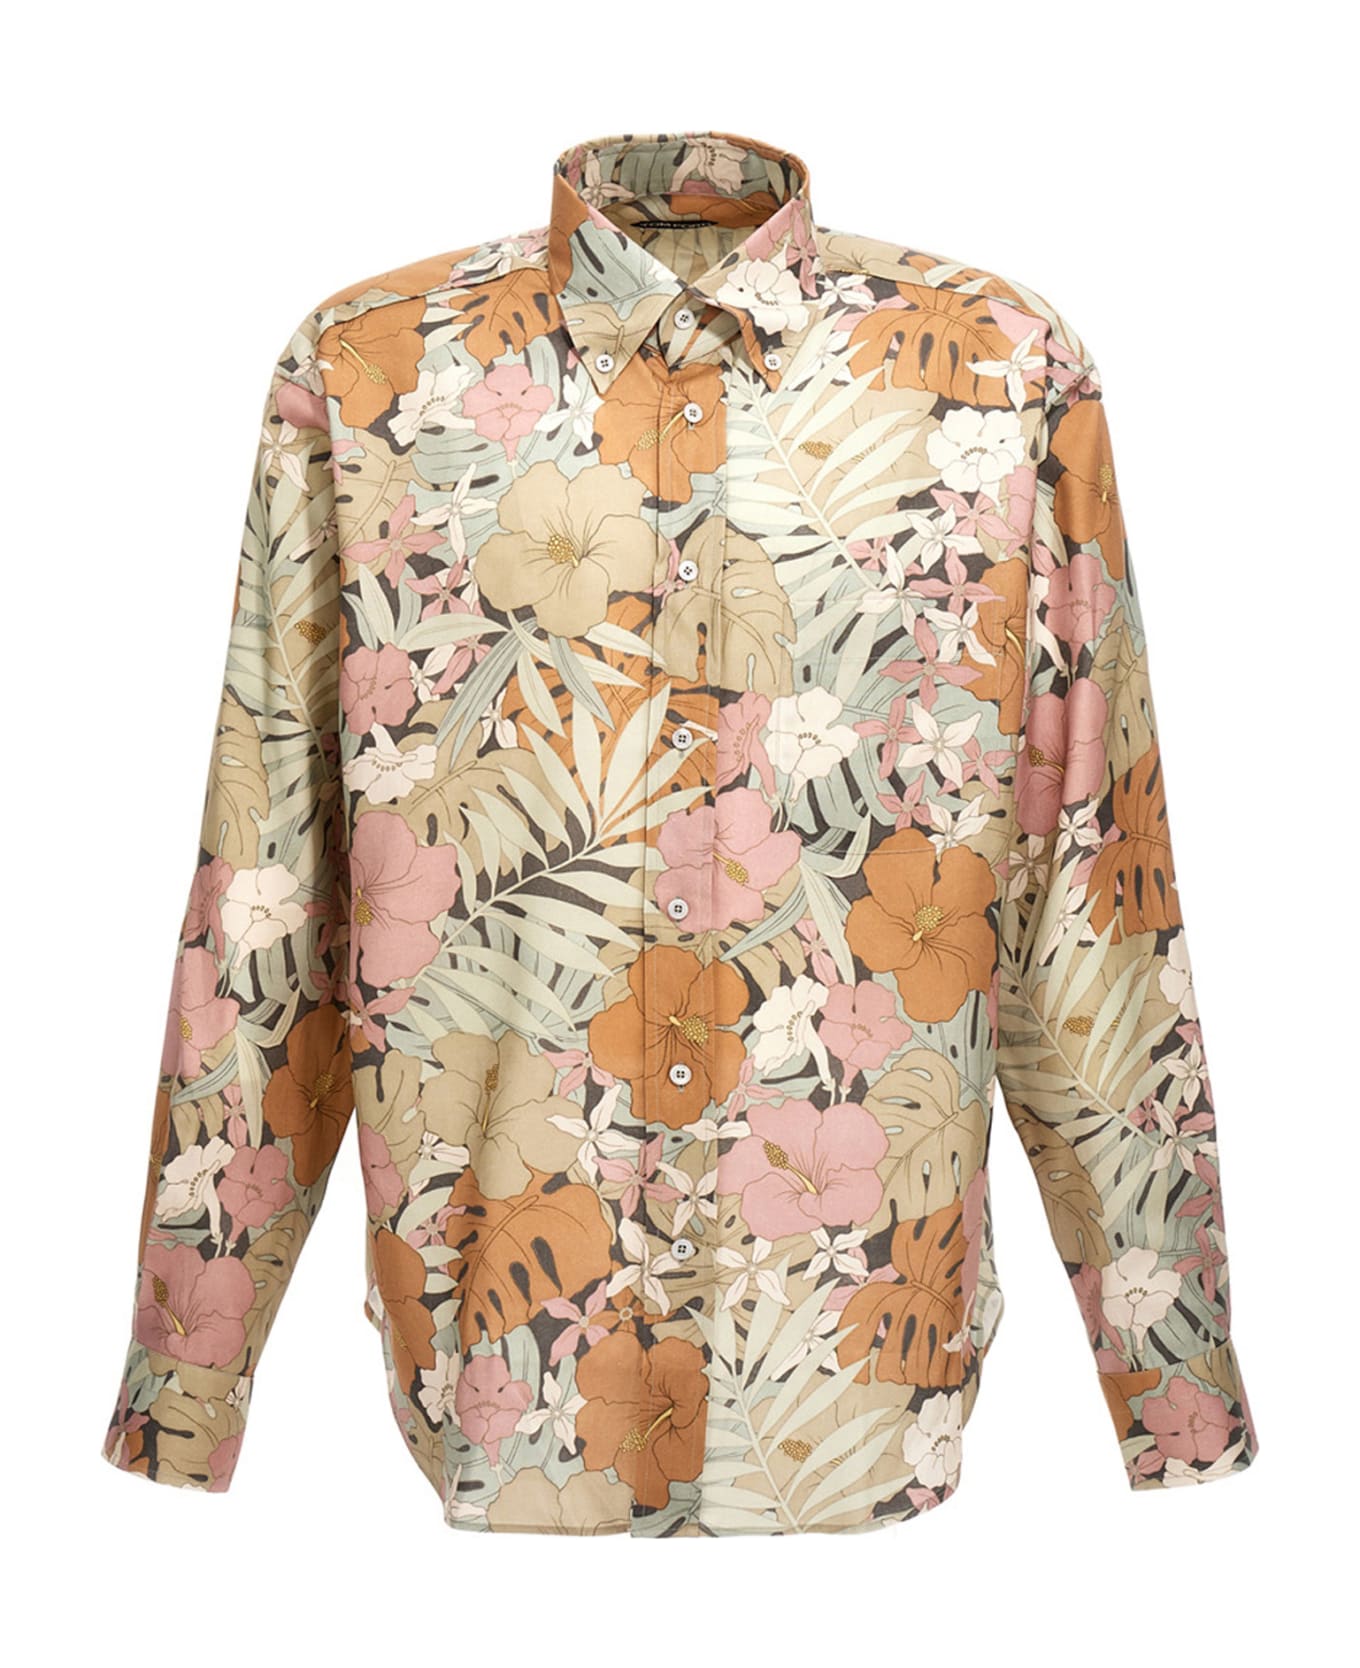 Tom Ford Floral Shirt - Multicolor